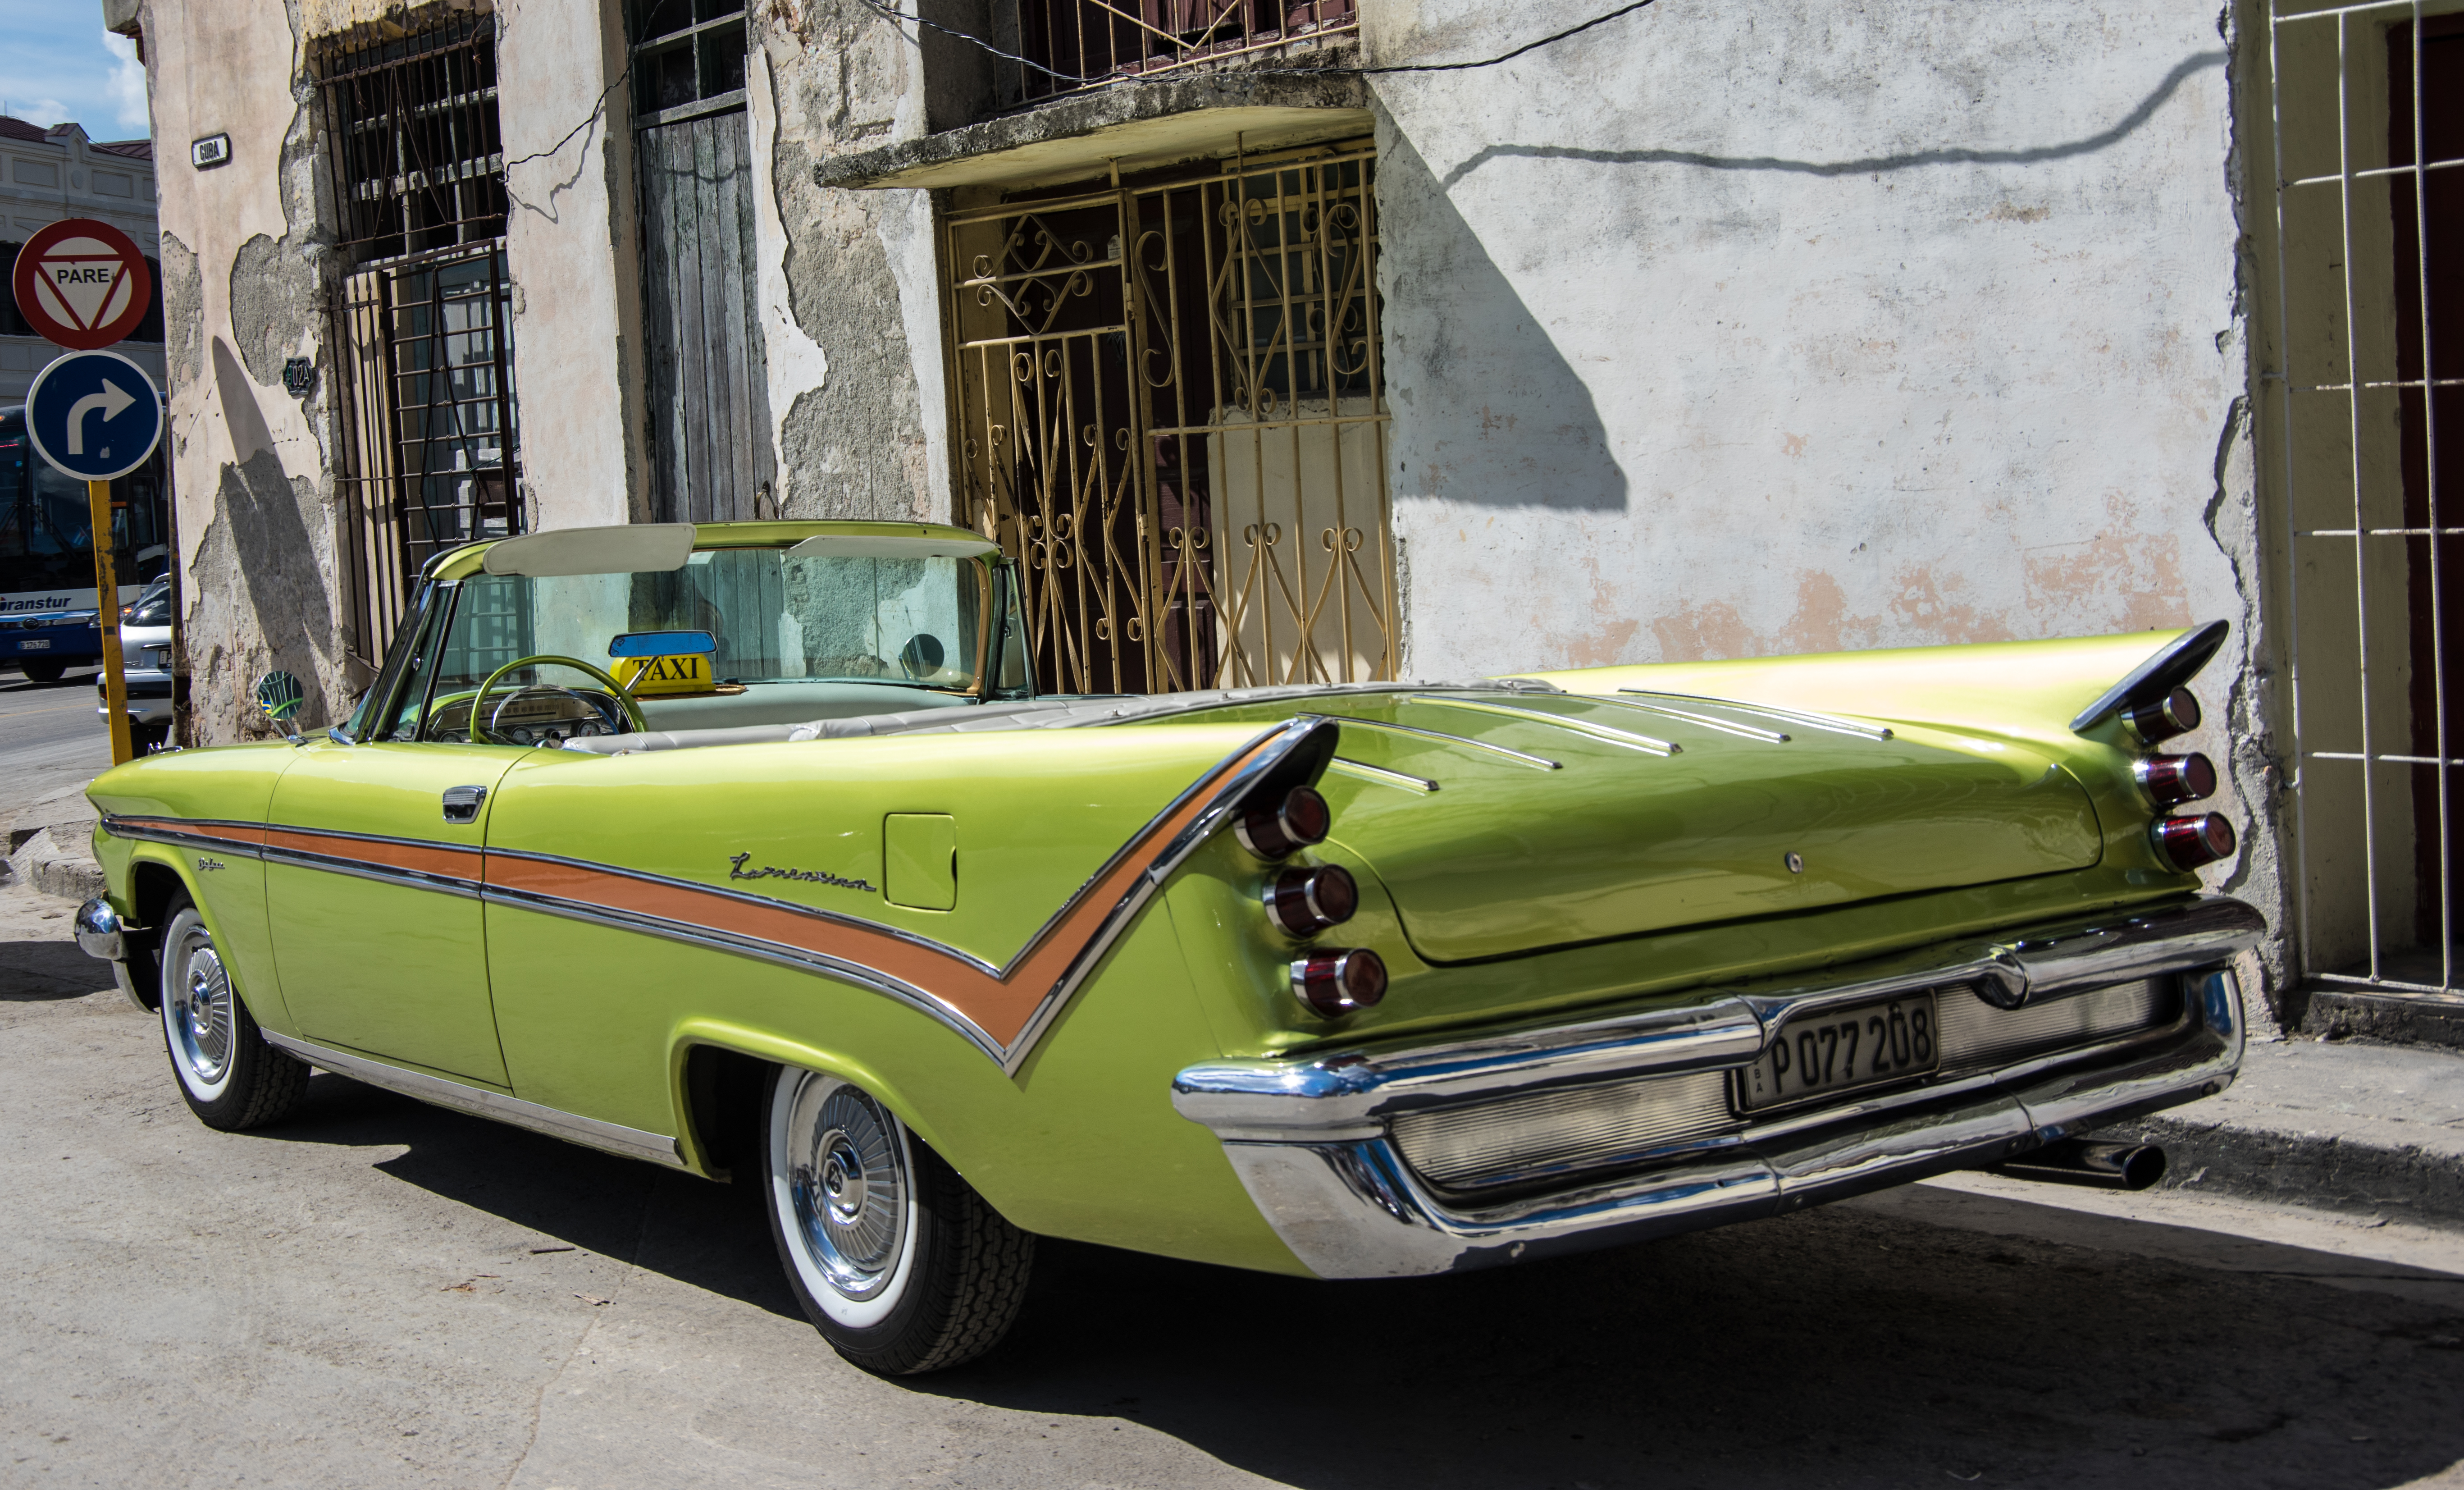 Cuba’s Classic 1950s Cars – February 2017 | Creative Photographs by